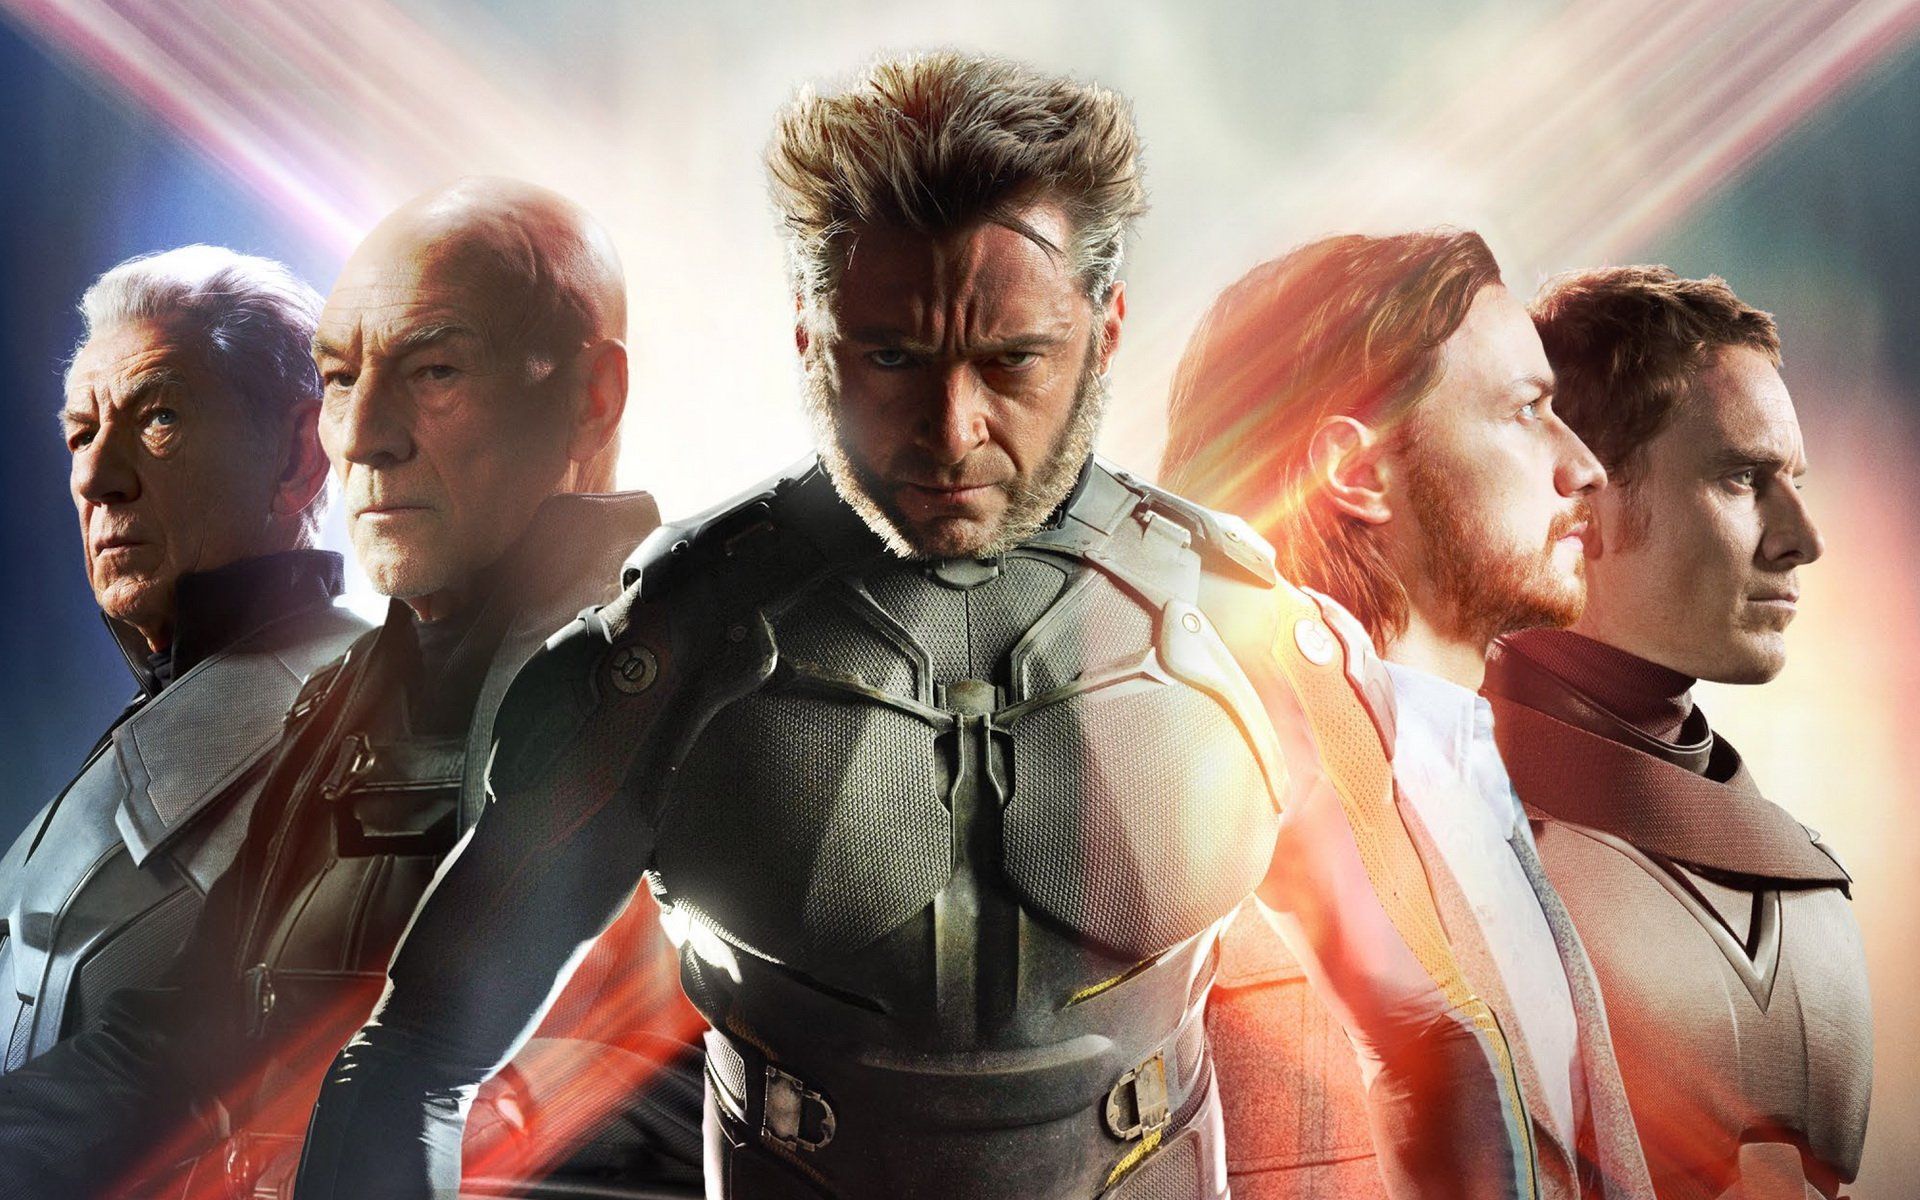 Desktop Wallpapers - X-Men: Days of Future Past - Movie | Free ...